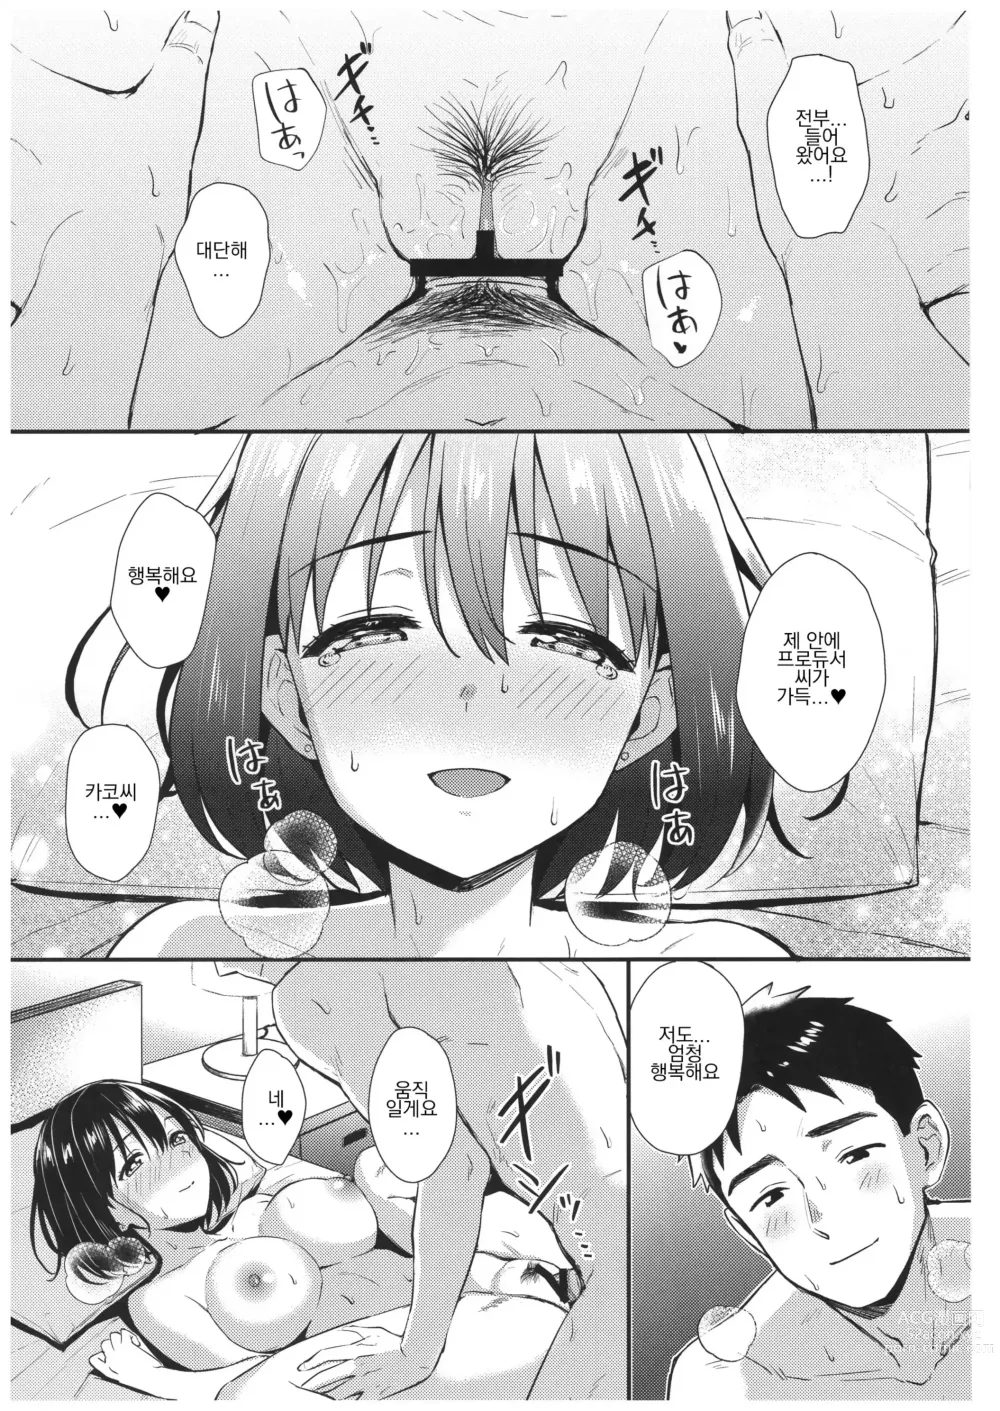 Page 19 of doujinshi 카코 씨와 첫 경험.